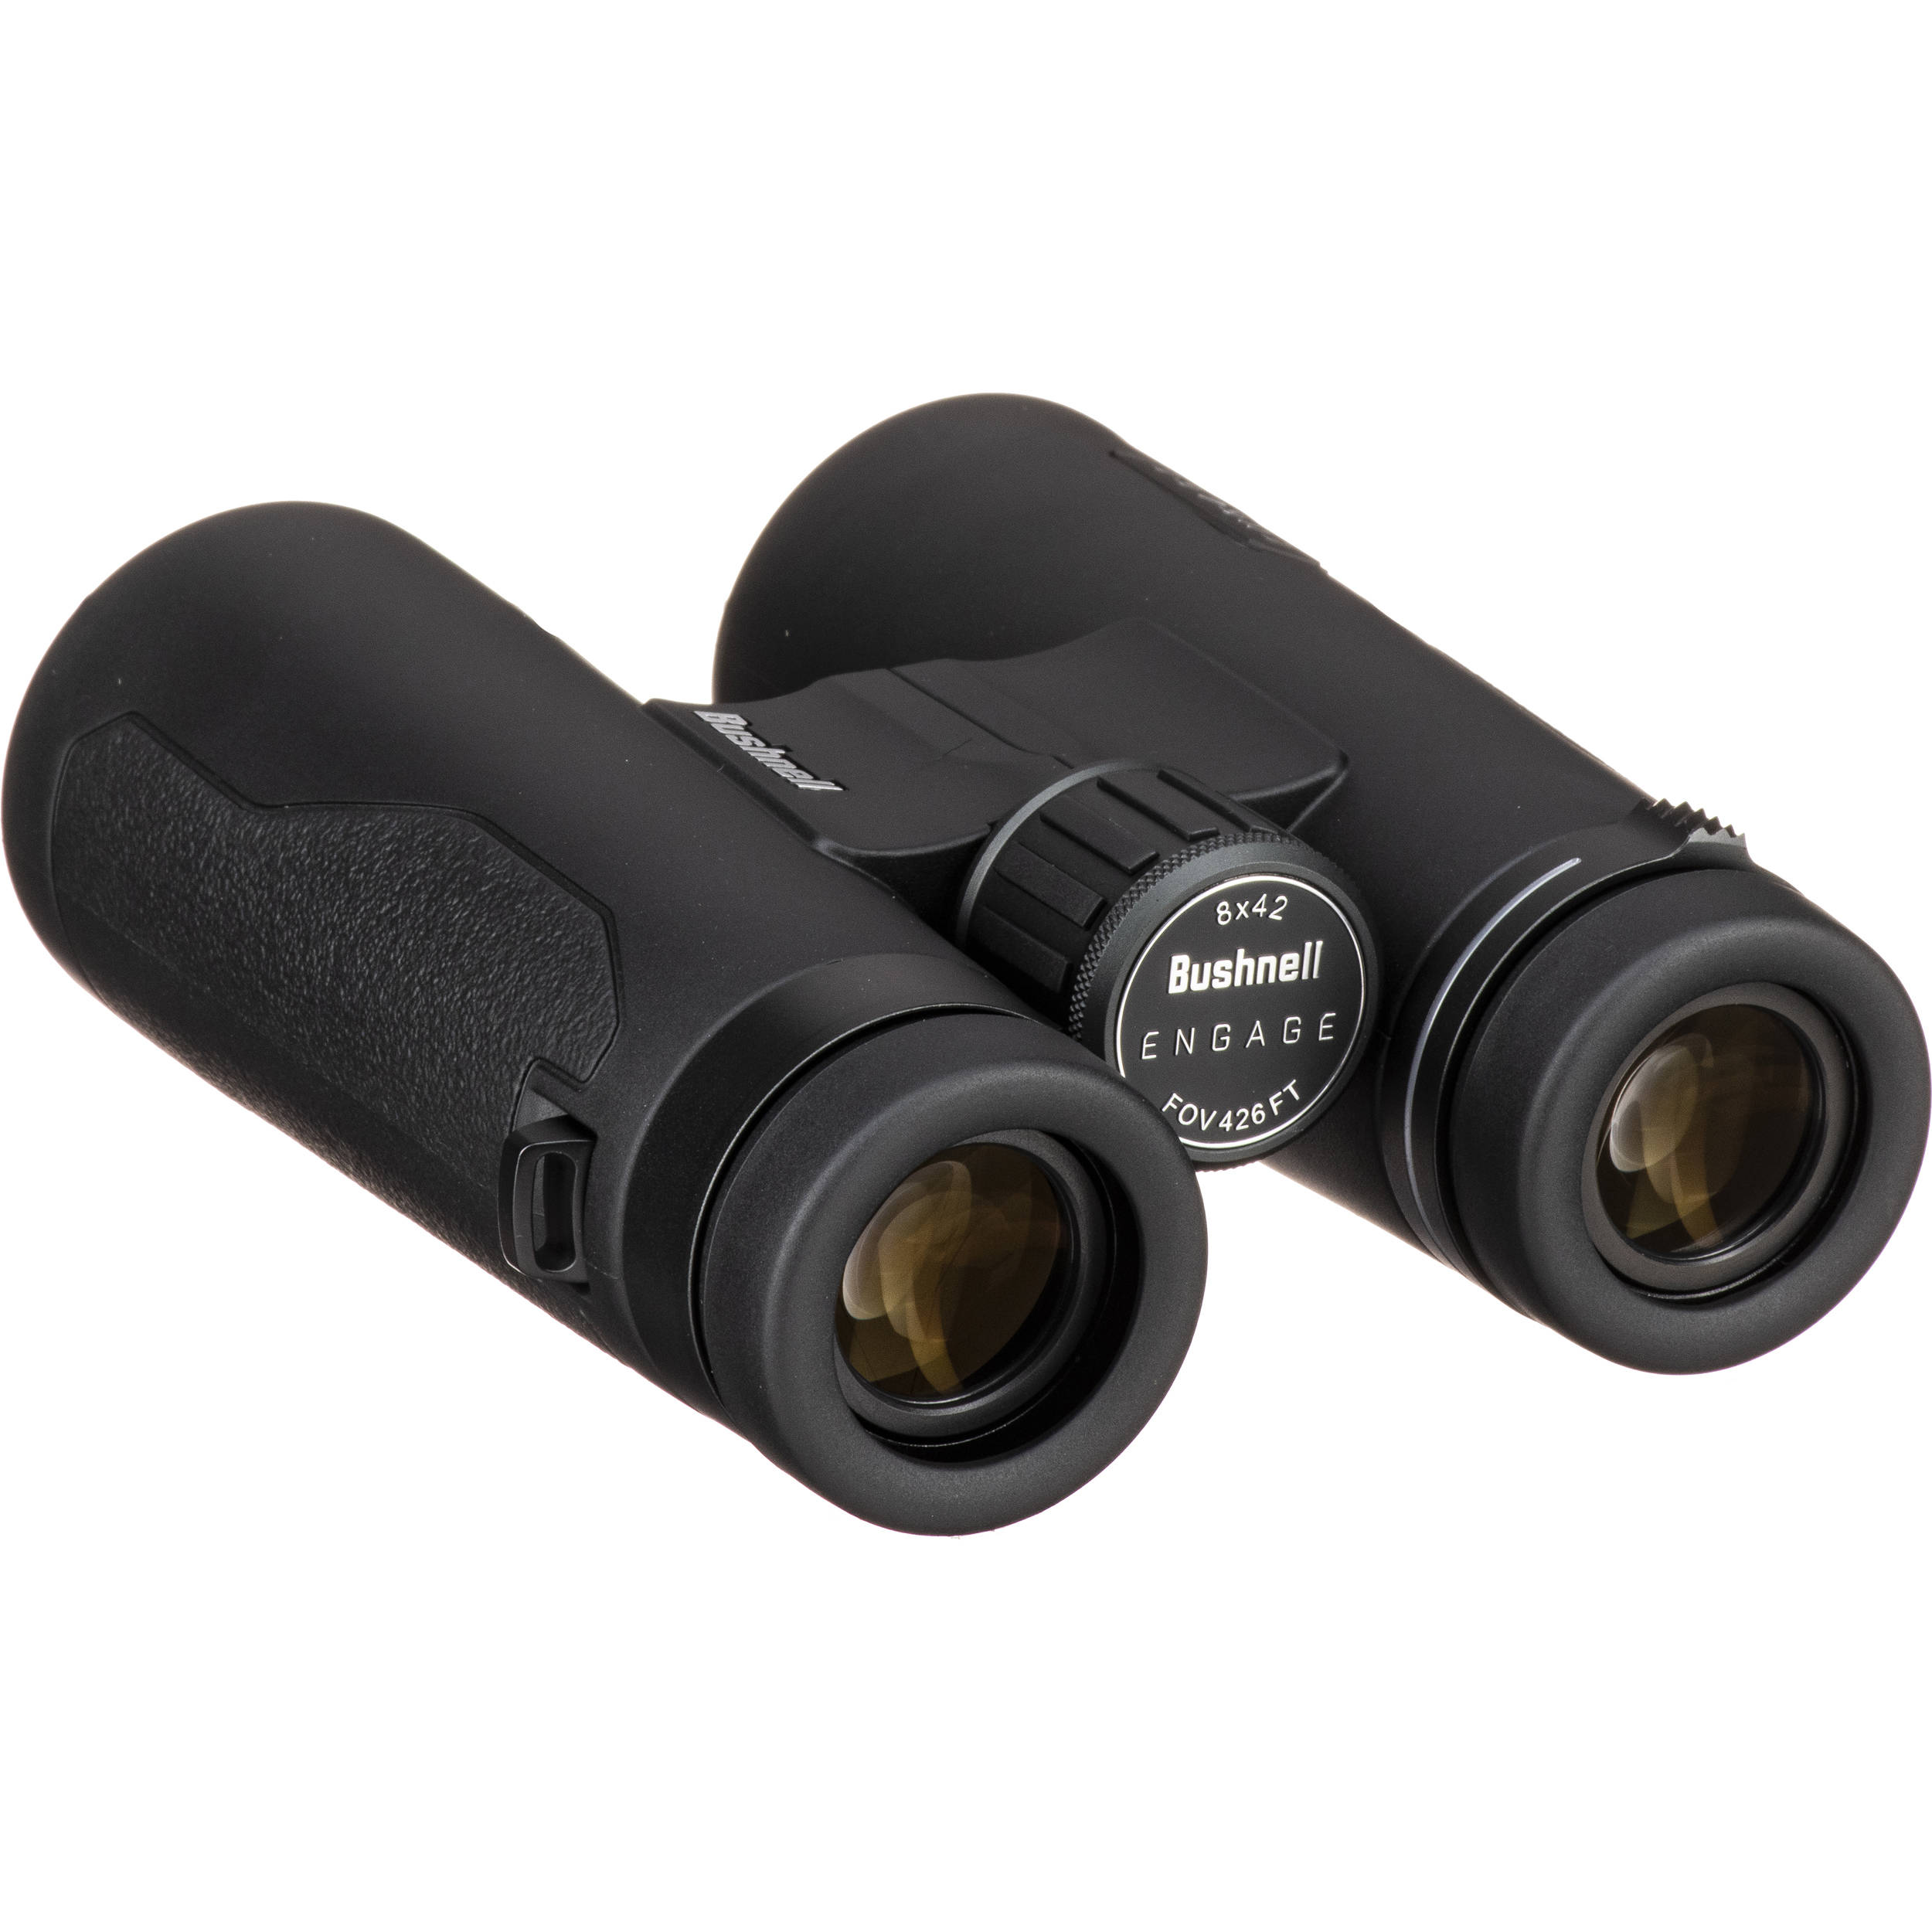 Bushnell 8x42 Engage Waterproof Binoculars